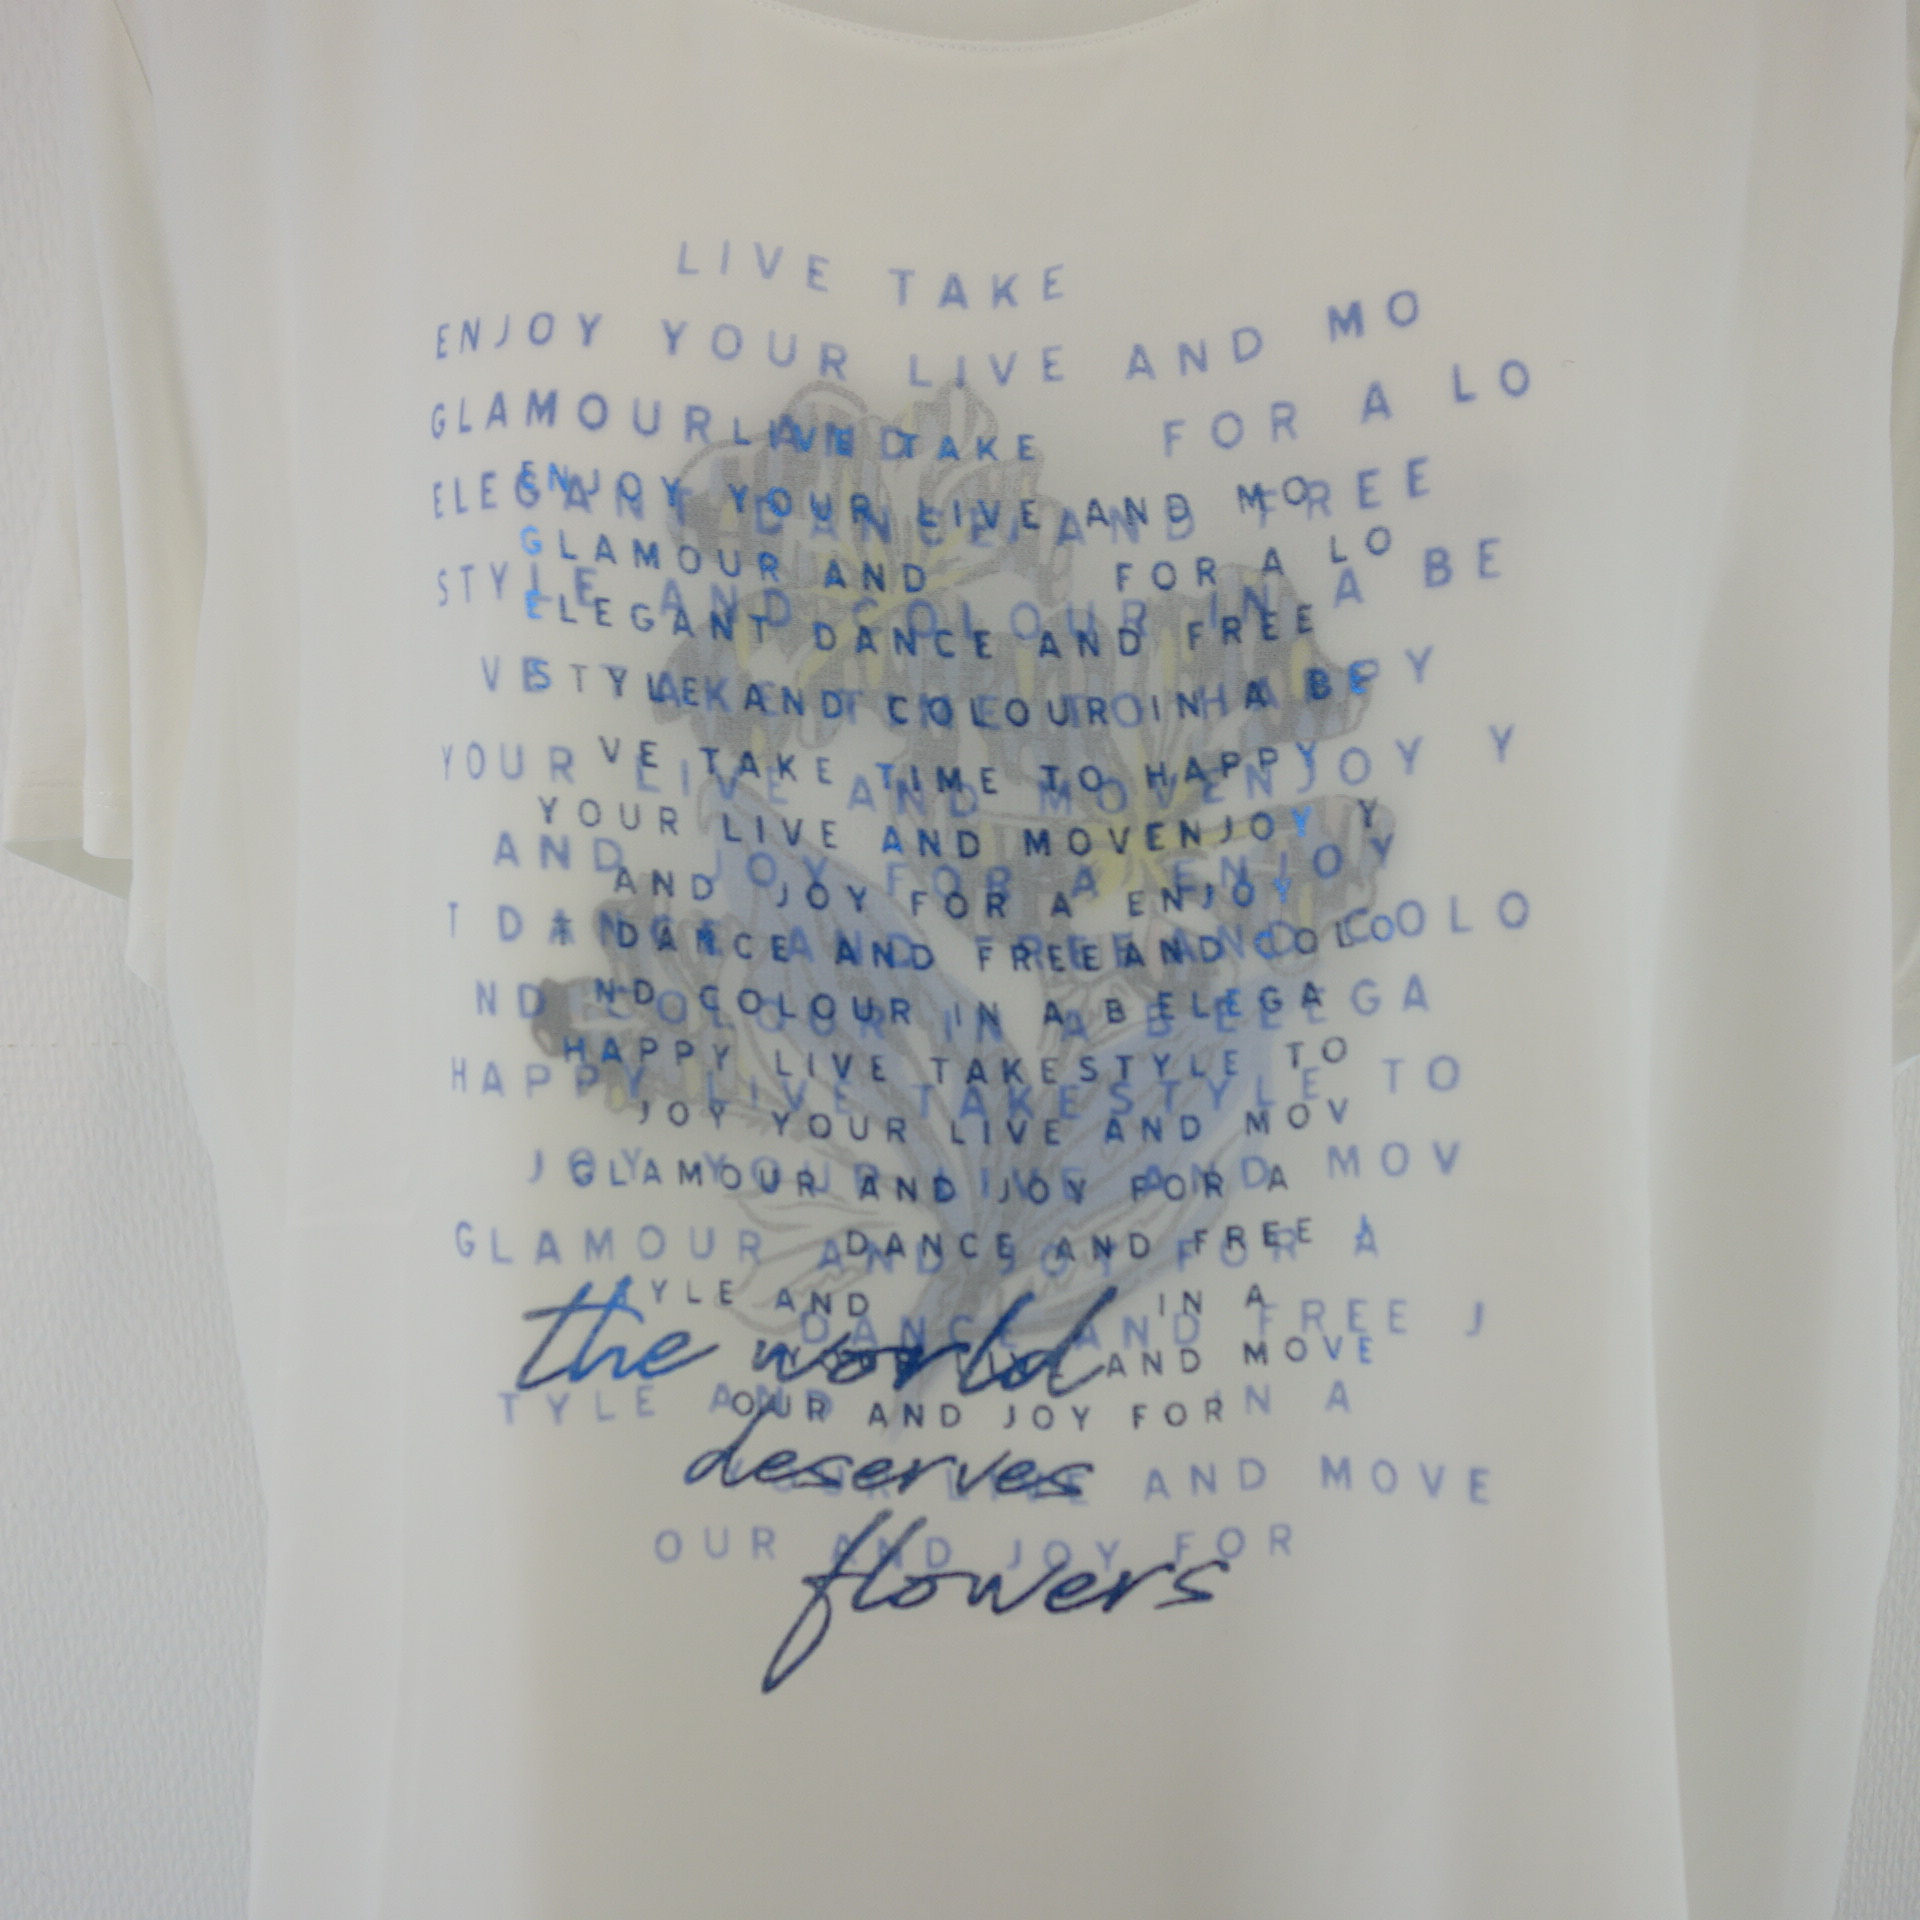 MORE & MORE Damen Sommer T Shirt T-Shirt Oberteil  Weiß Print Blau Motto